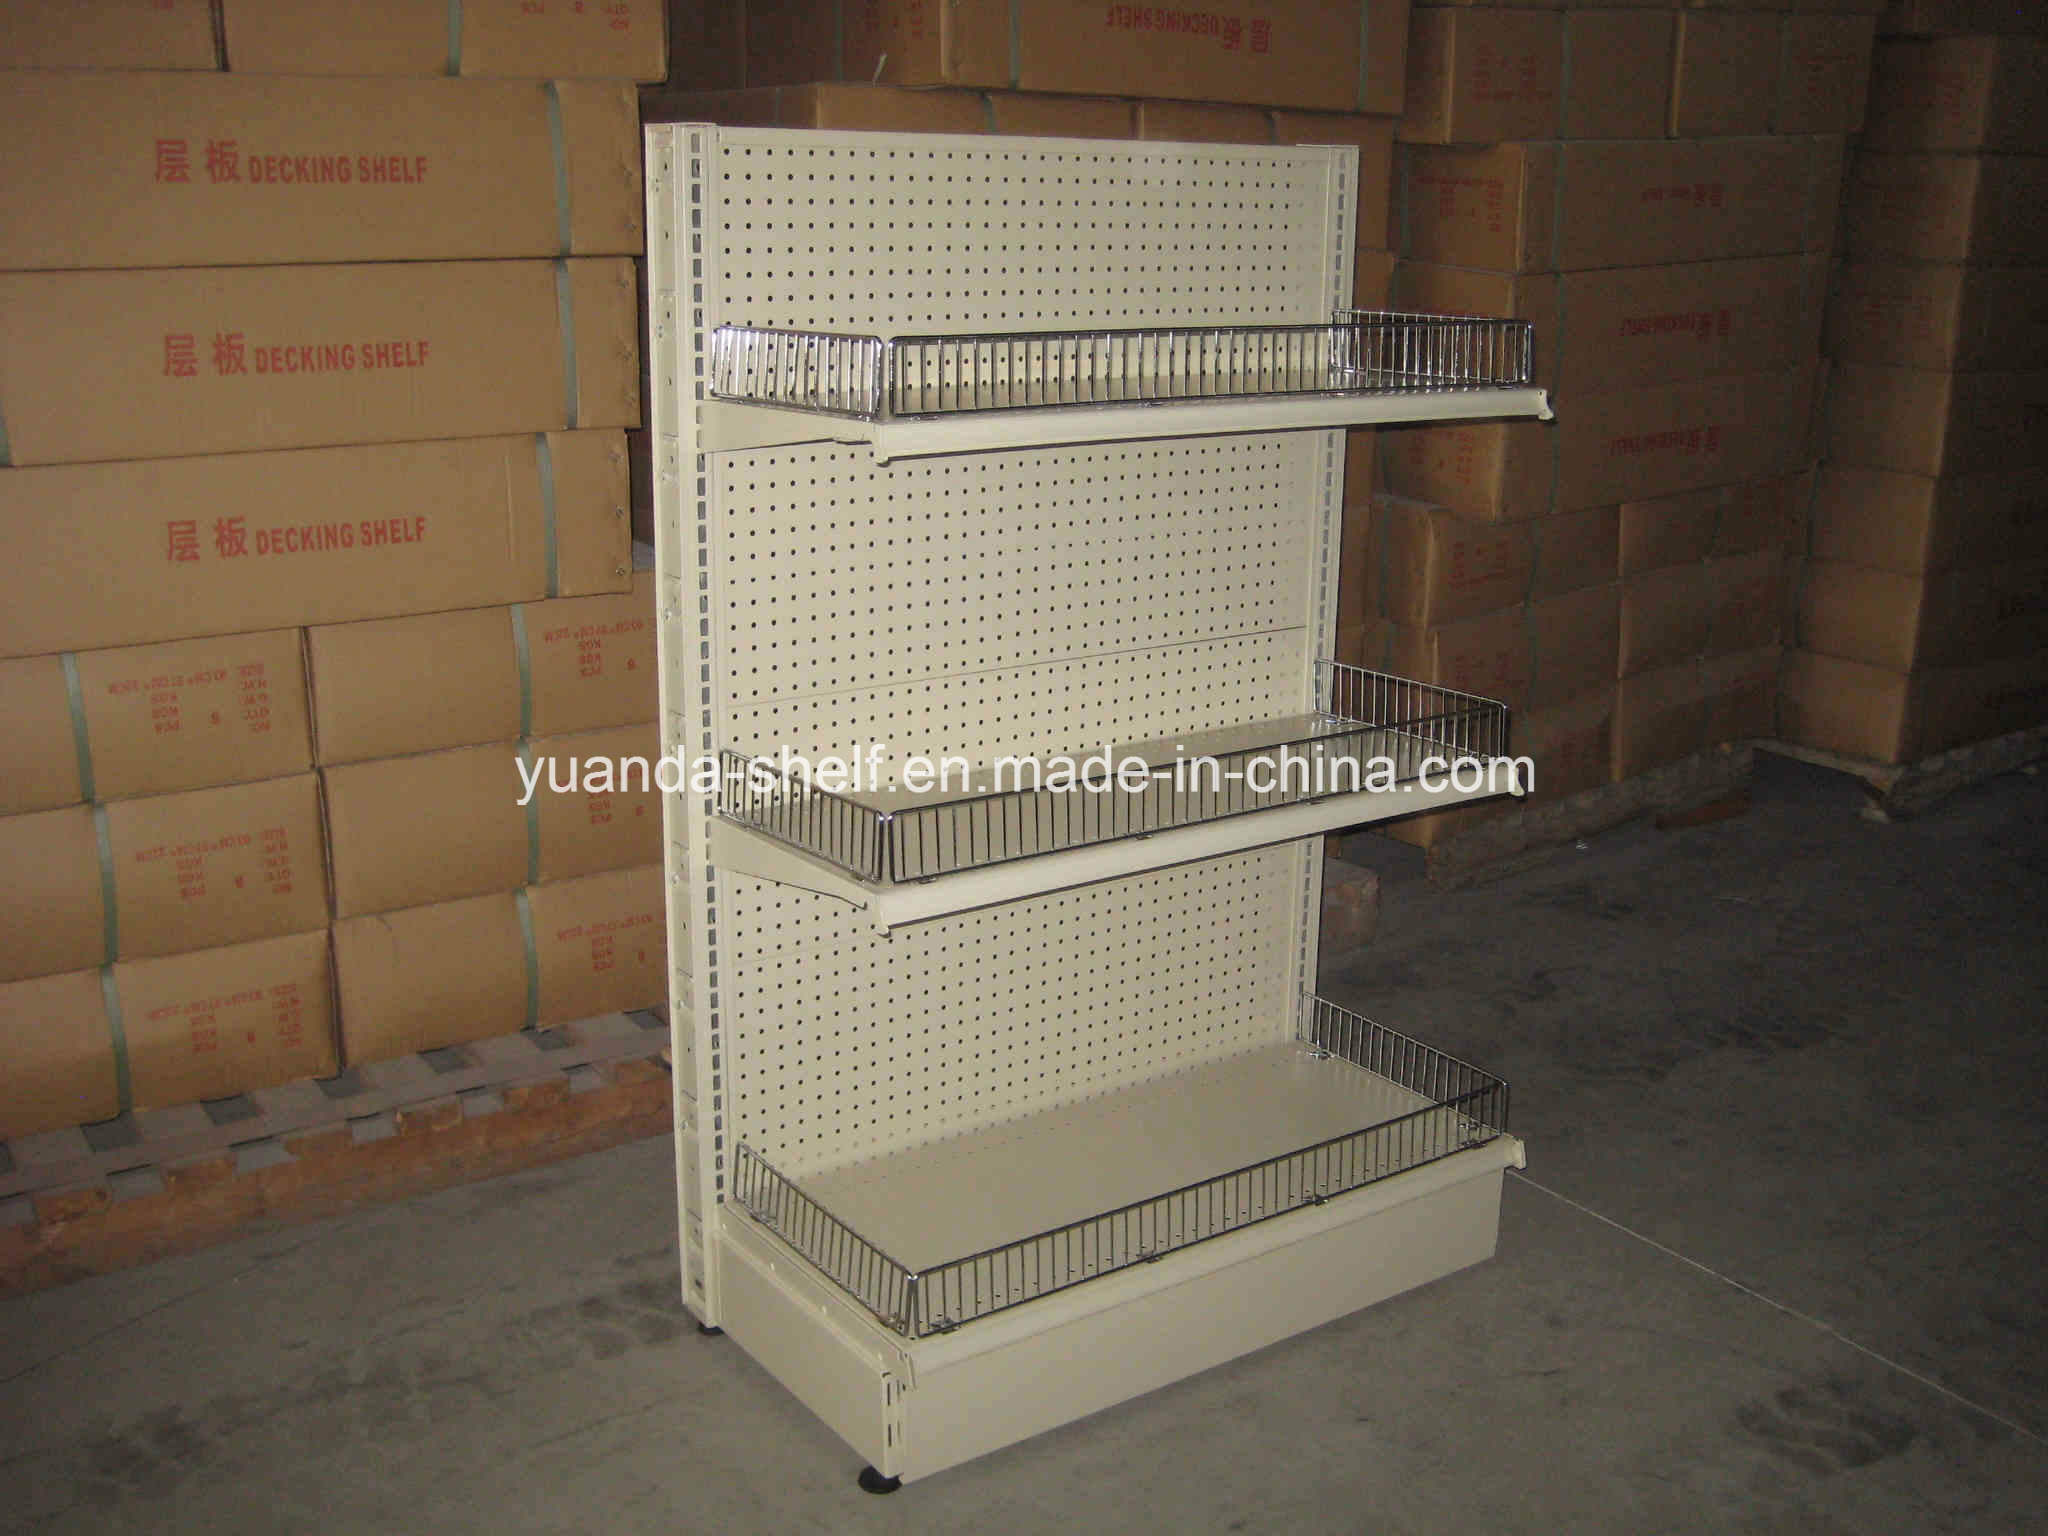 Us Market Madix Style Supermarket Shelf Shelving System by Manufacture